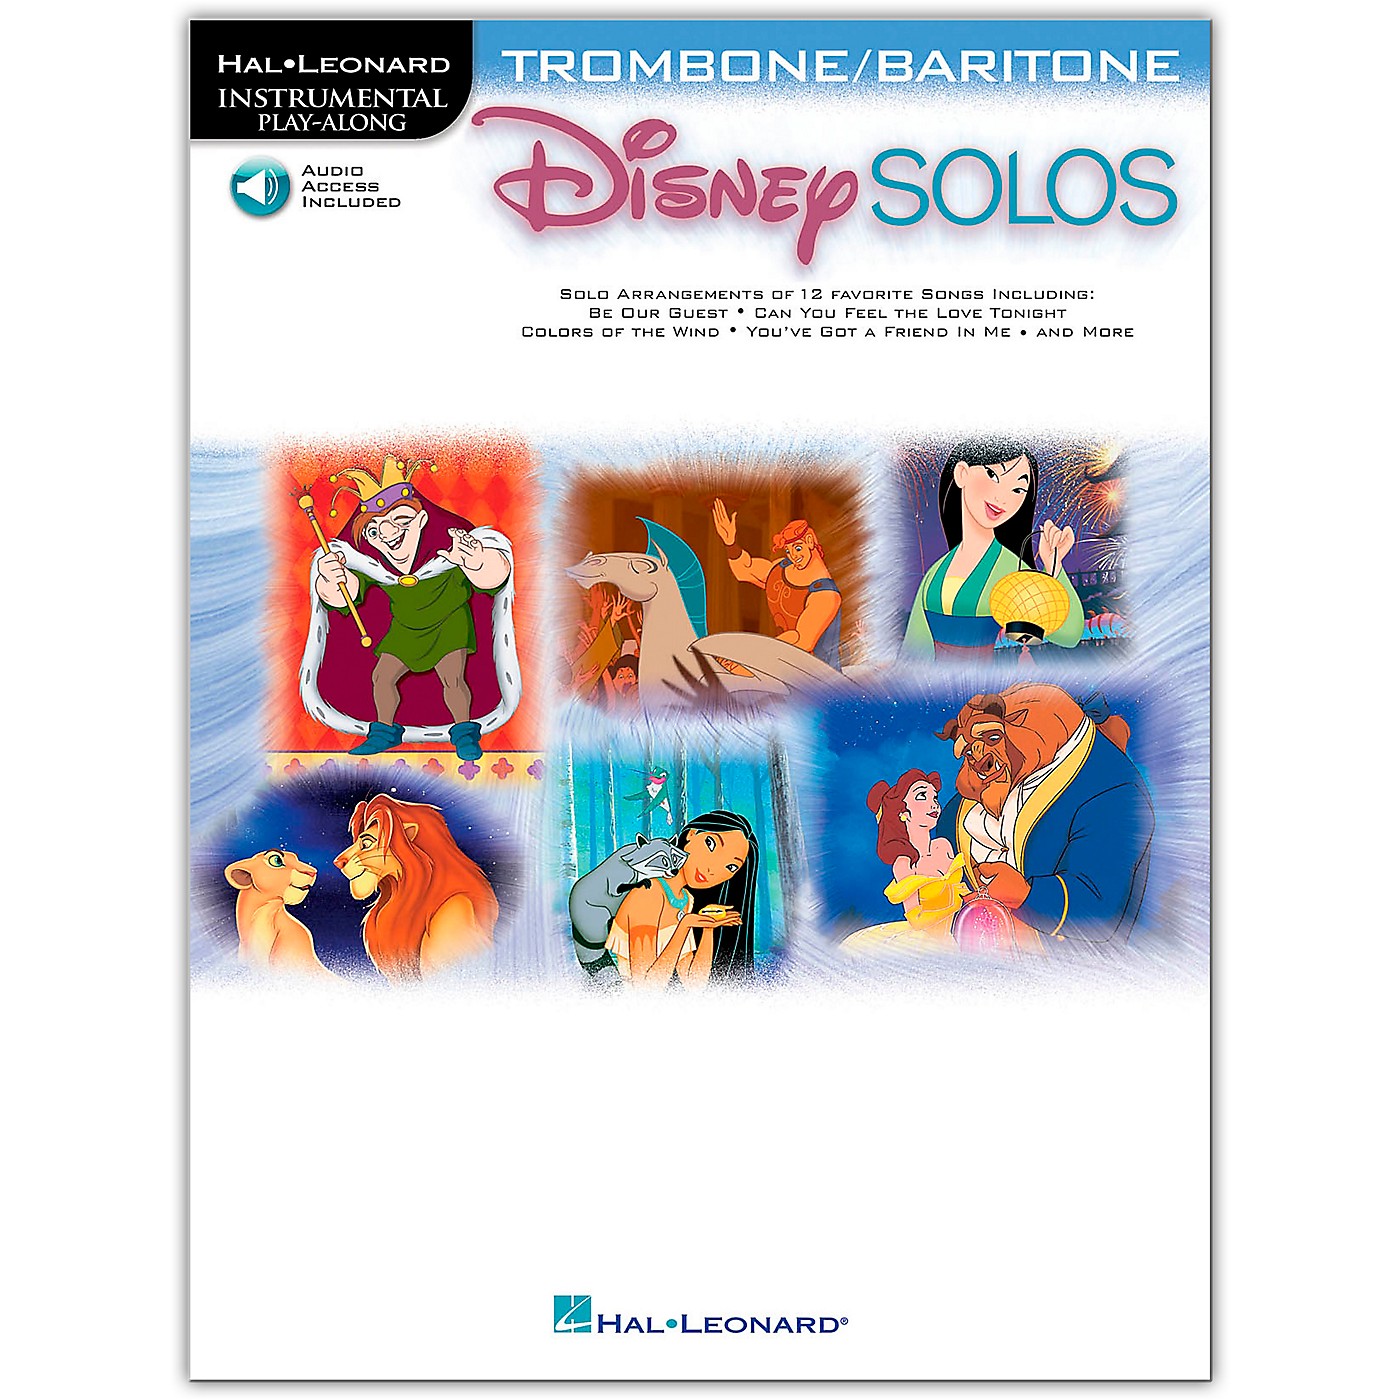 Hal Leonard Play-Along Disney Solos Book for Trombone/Baritone (Book/Audio Online) thumbnail